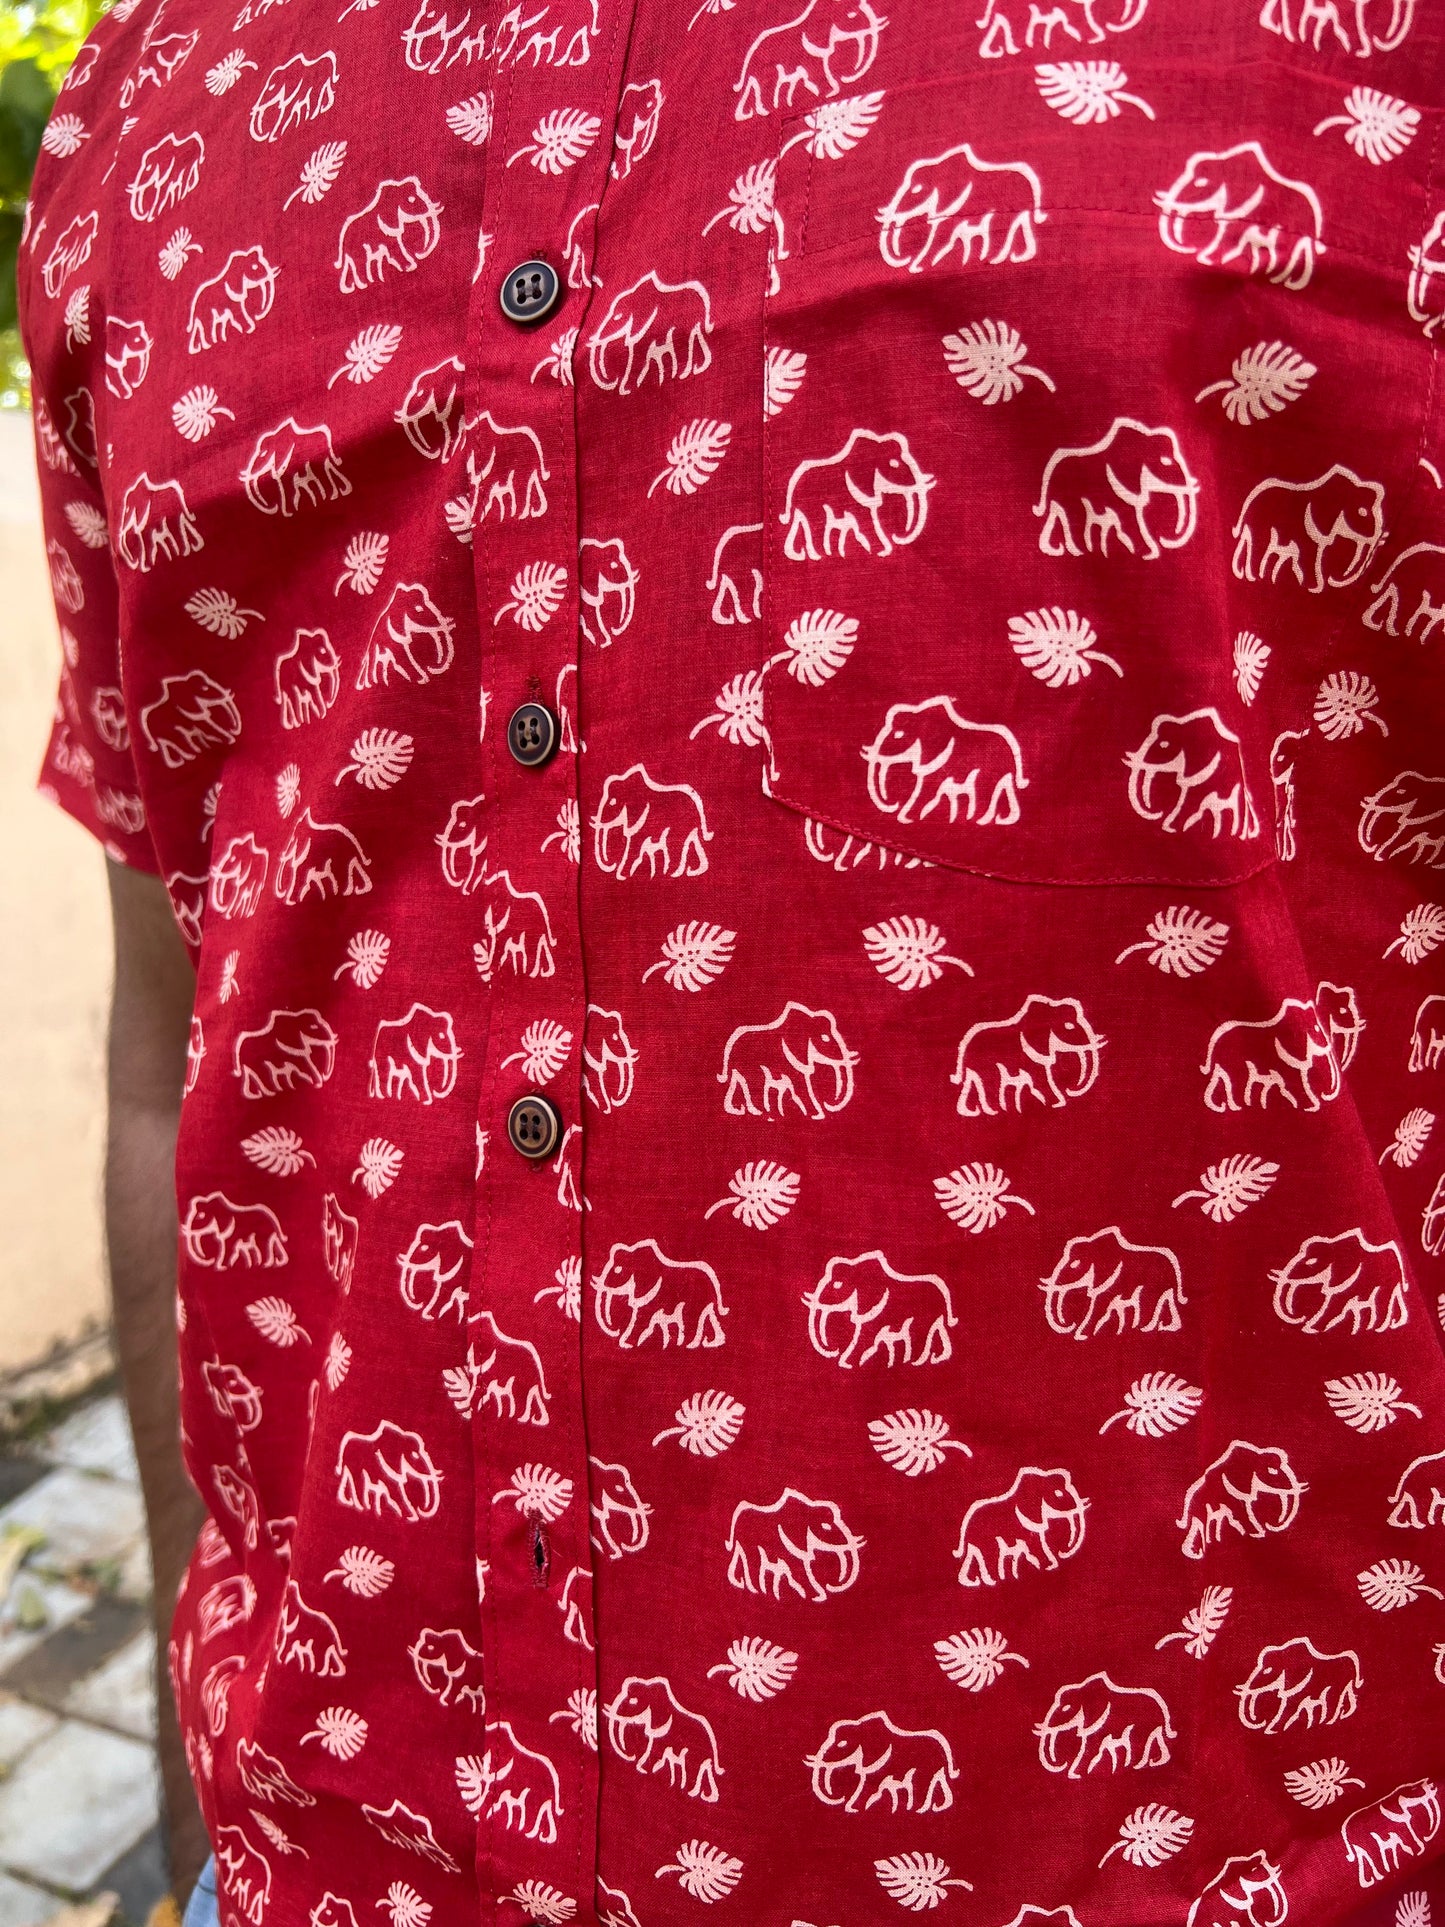 Southloom Jaipur Cotton Red Elephant Hand Block Printed Shirt (Half Sleeves)